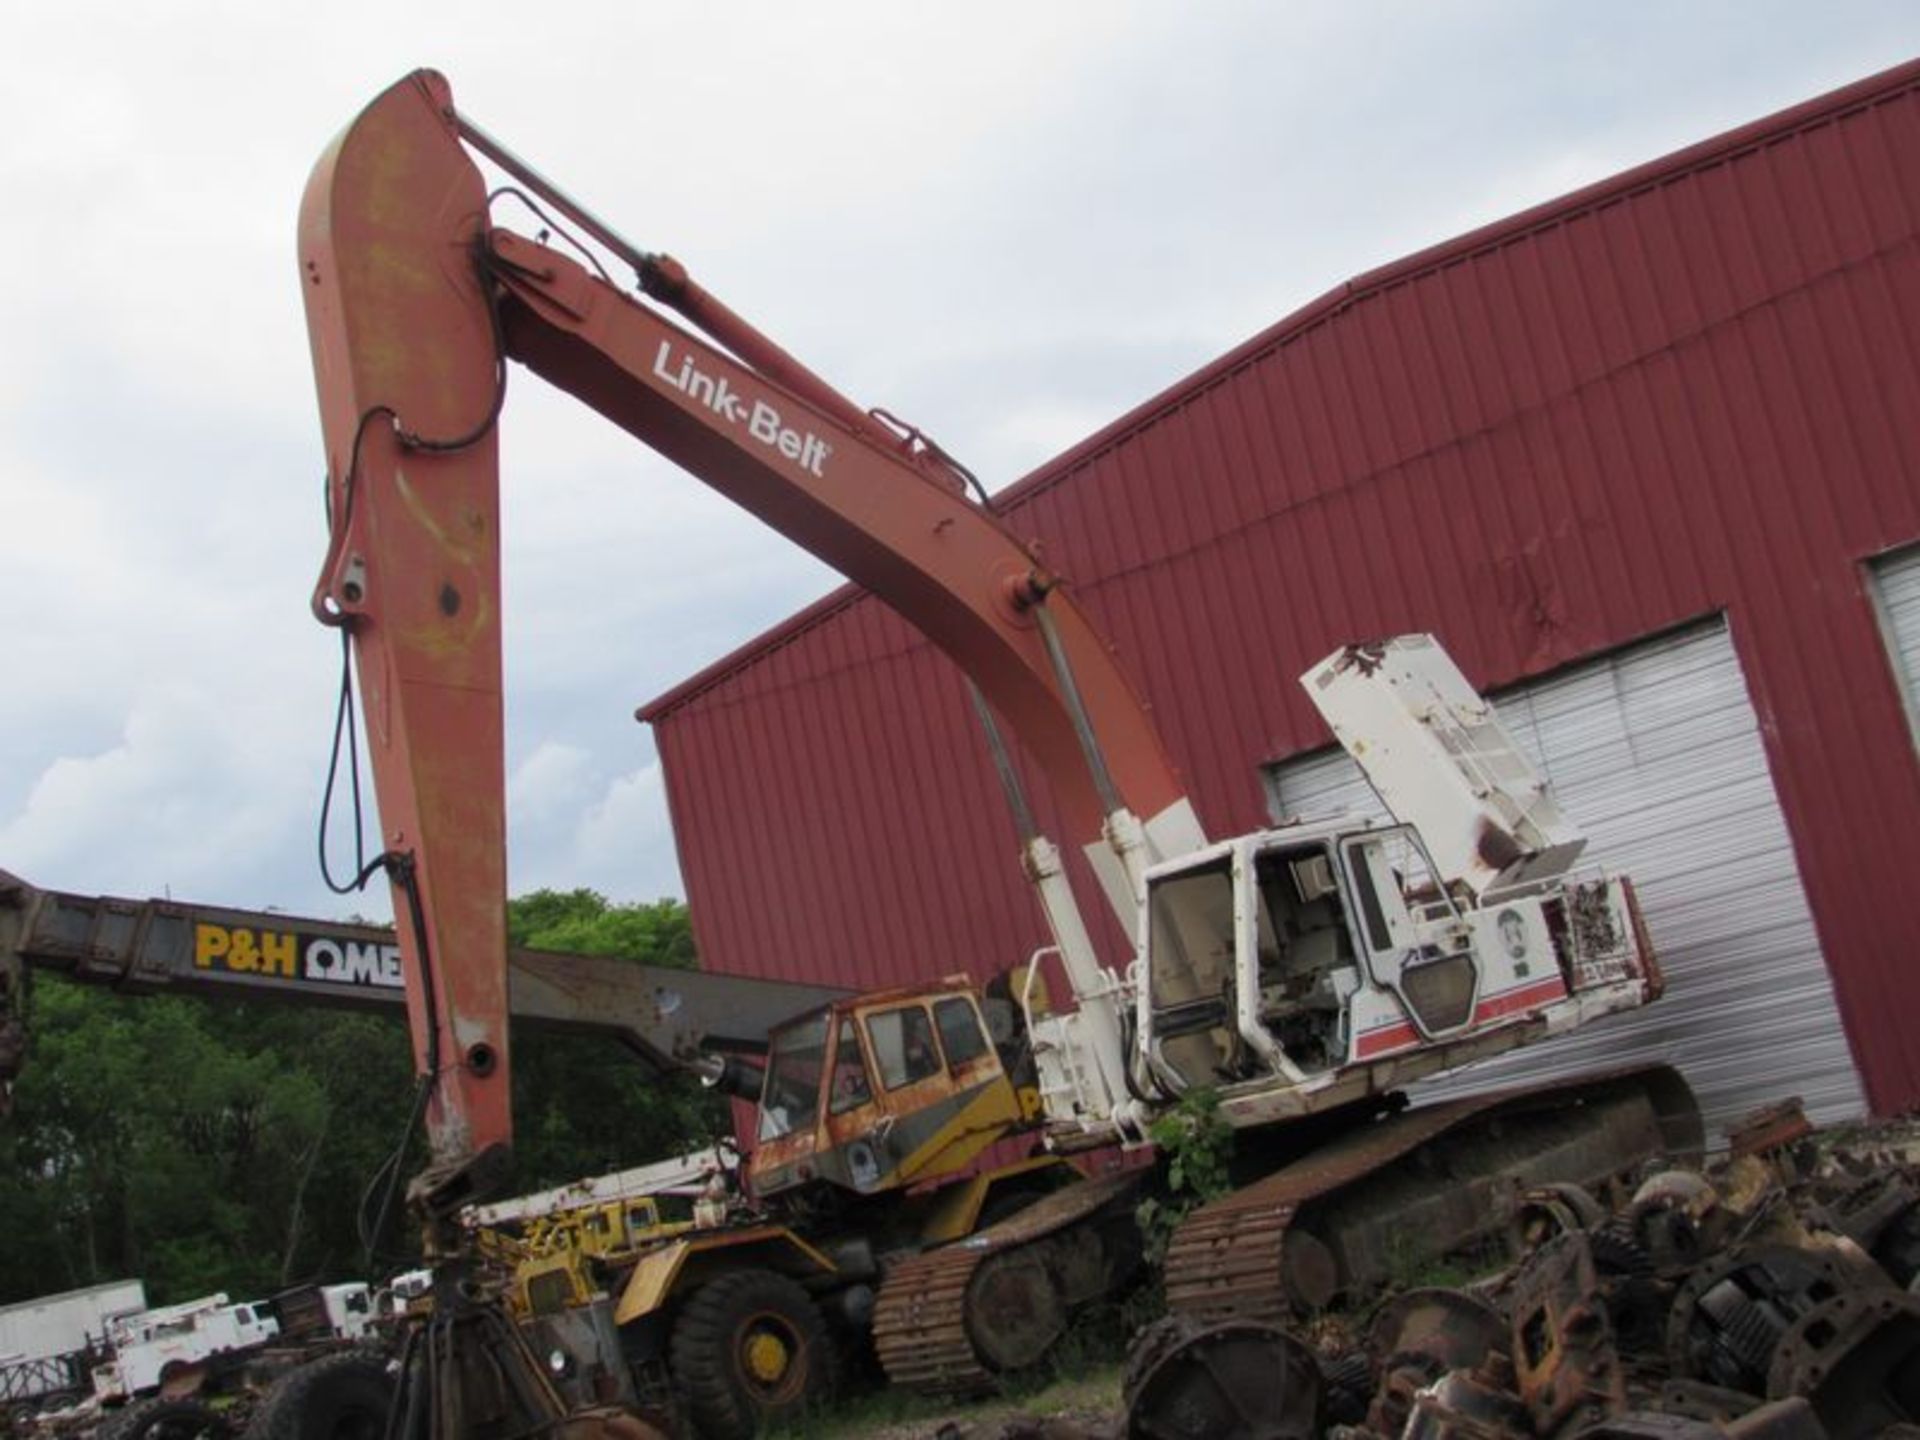 Link-belt LS5800 C series 2 Hydraulic Excavator (Orange Peel Attachment Sold Separately) - Image 5 of 5